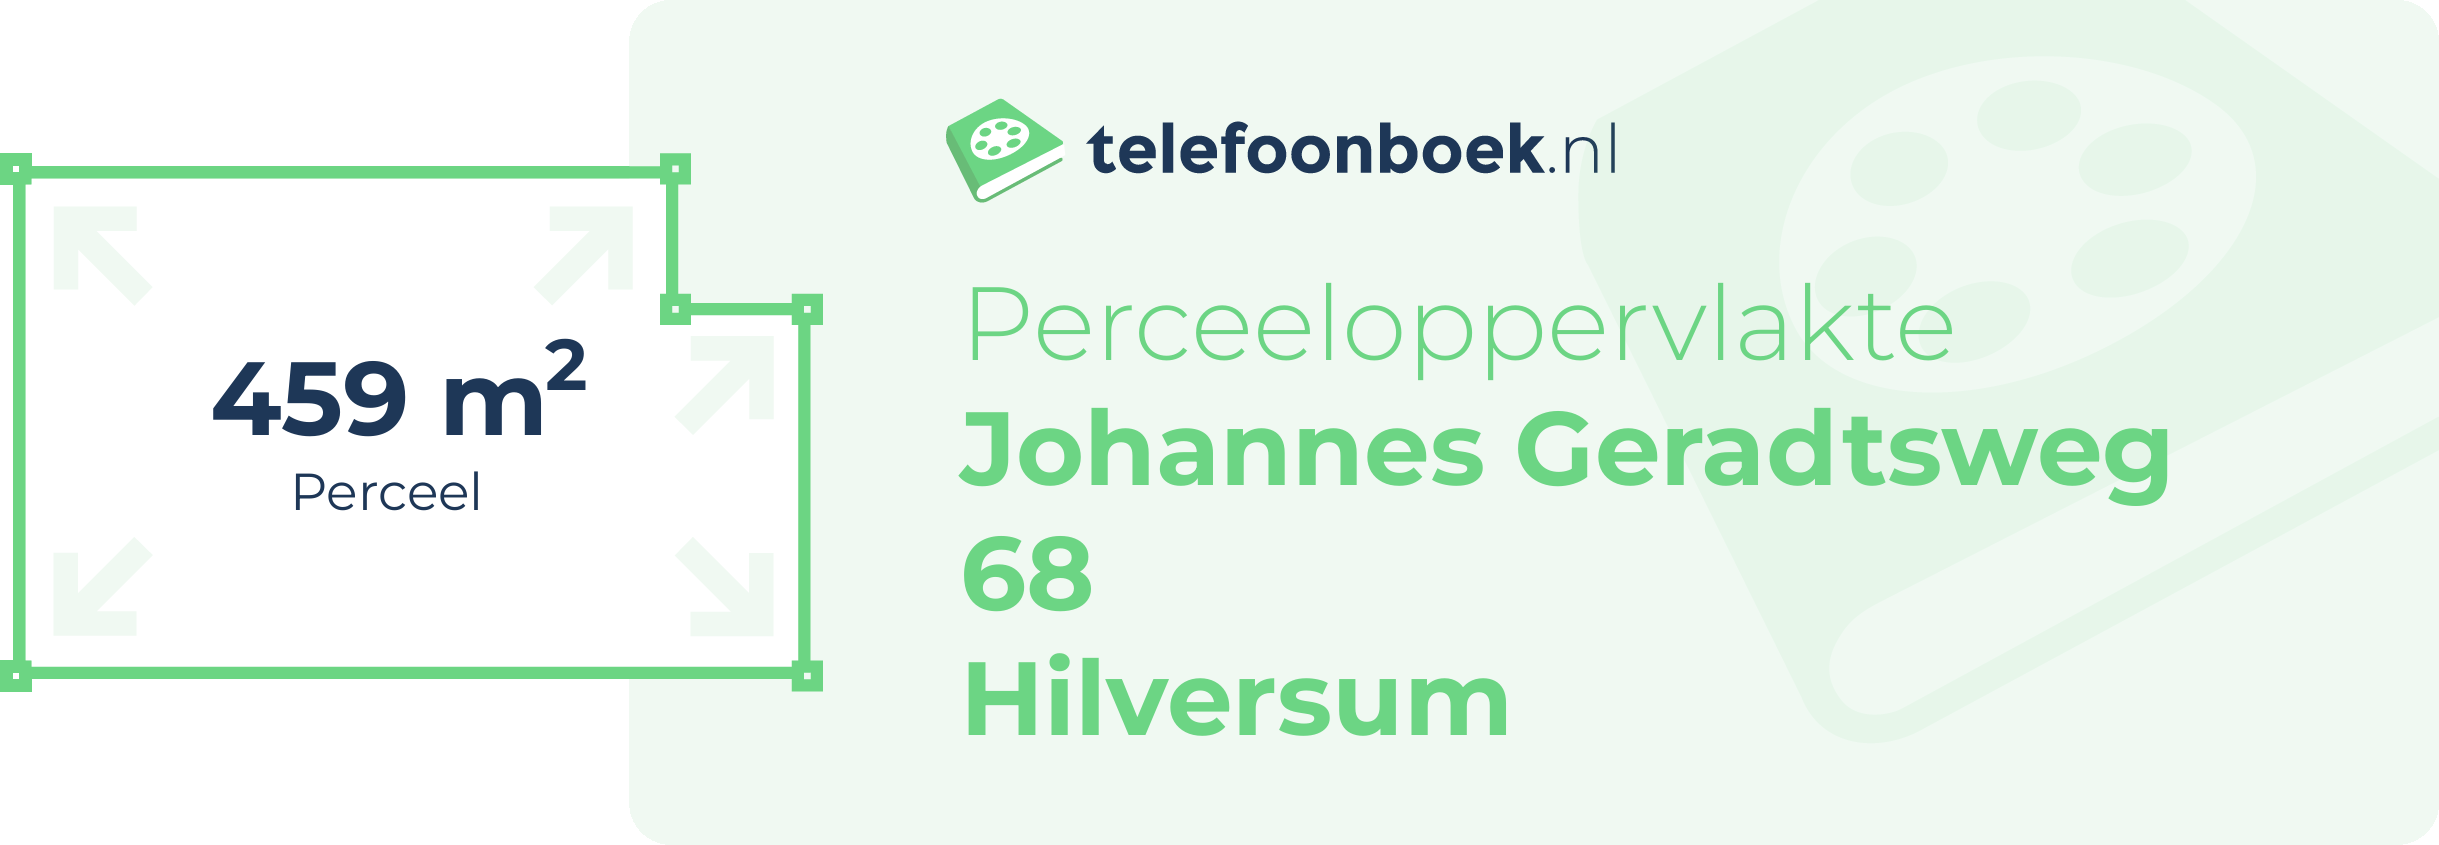 Perceeloppervlakte Johannes Geradtsweg 68 Hilversum